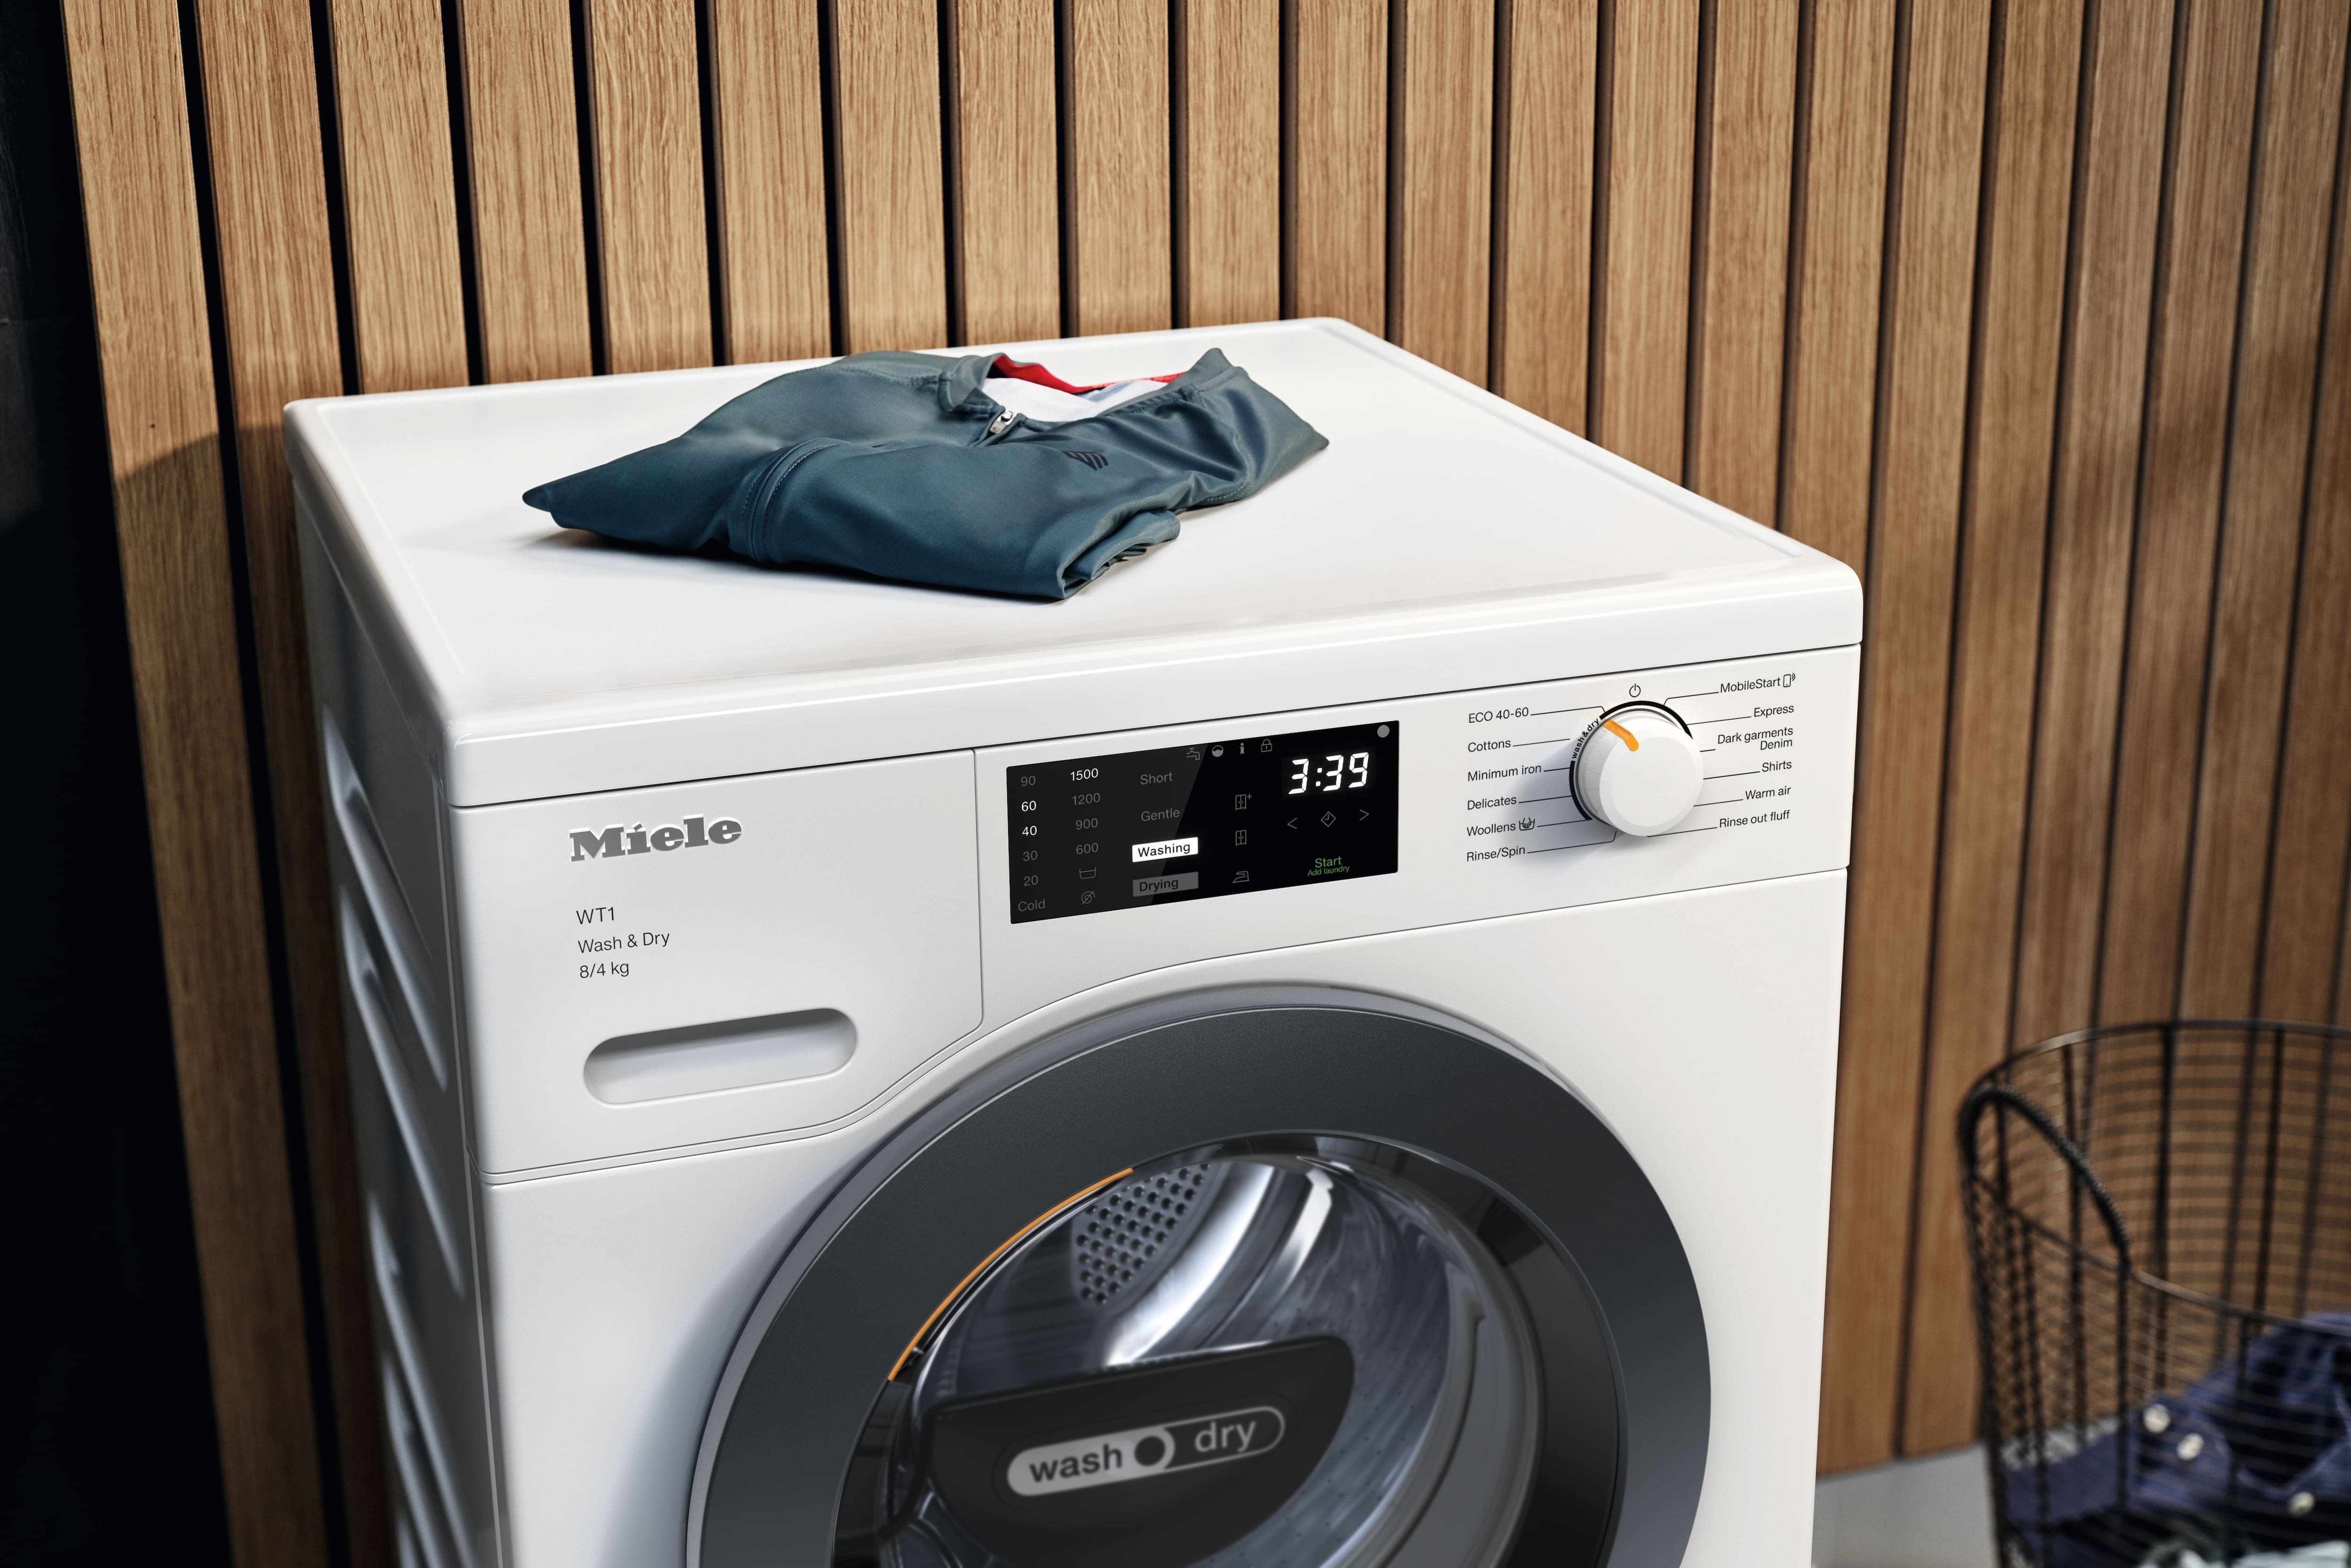 Miele washer/dryer machine